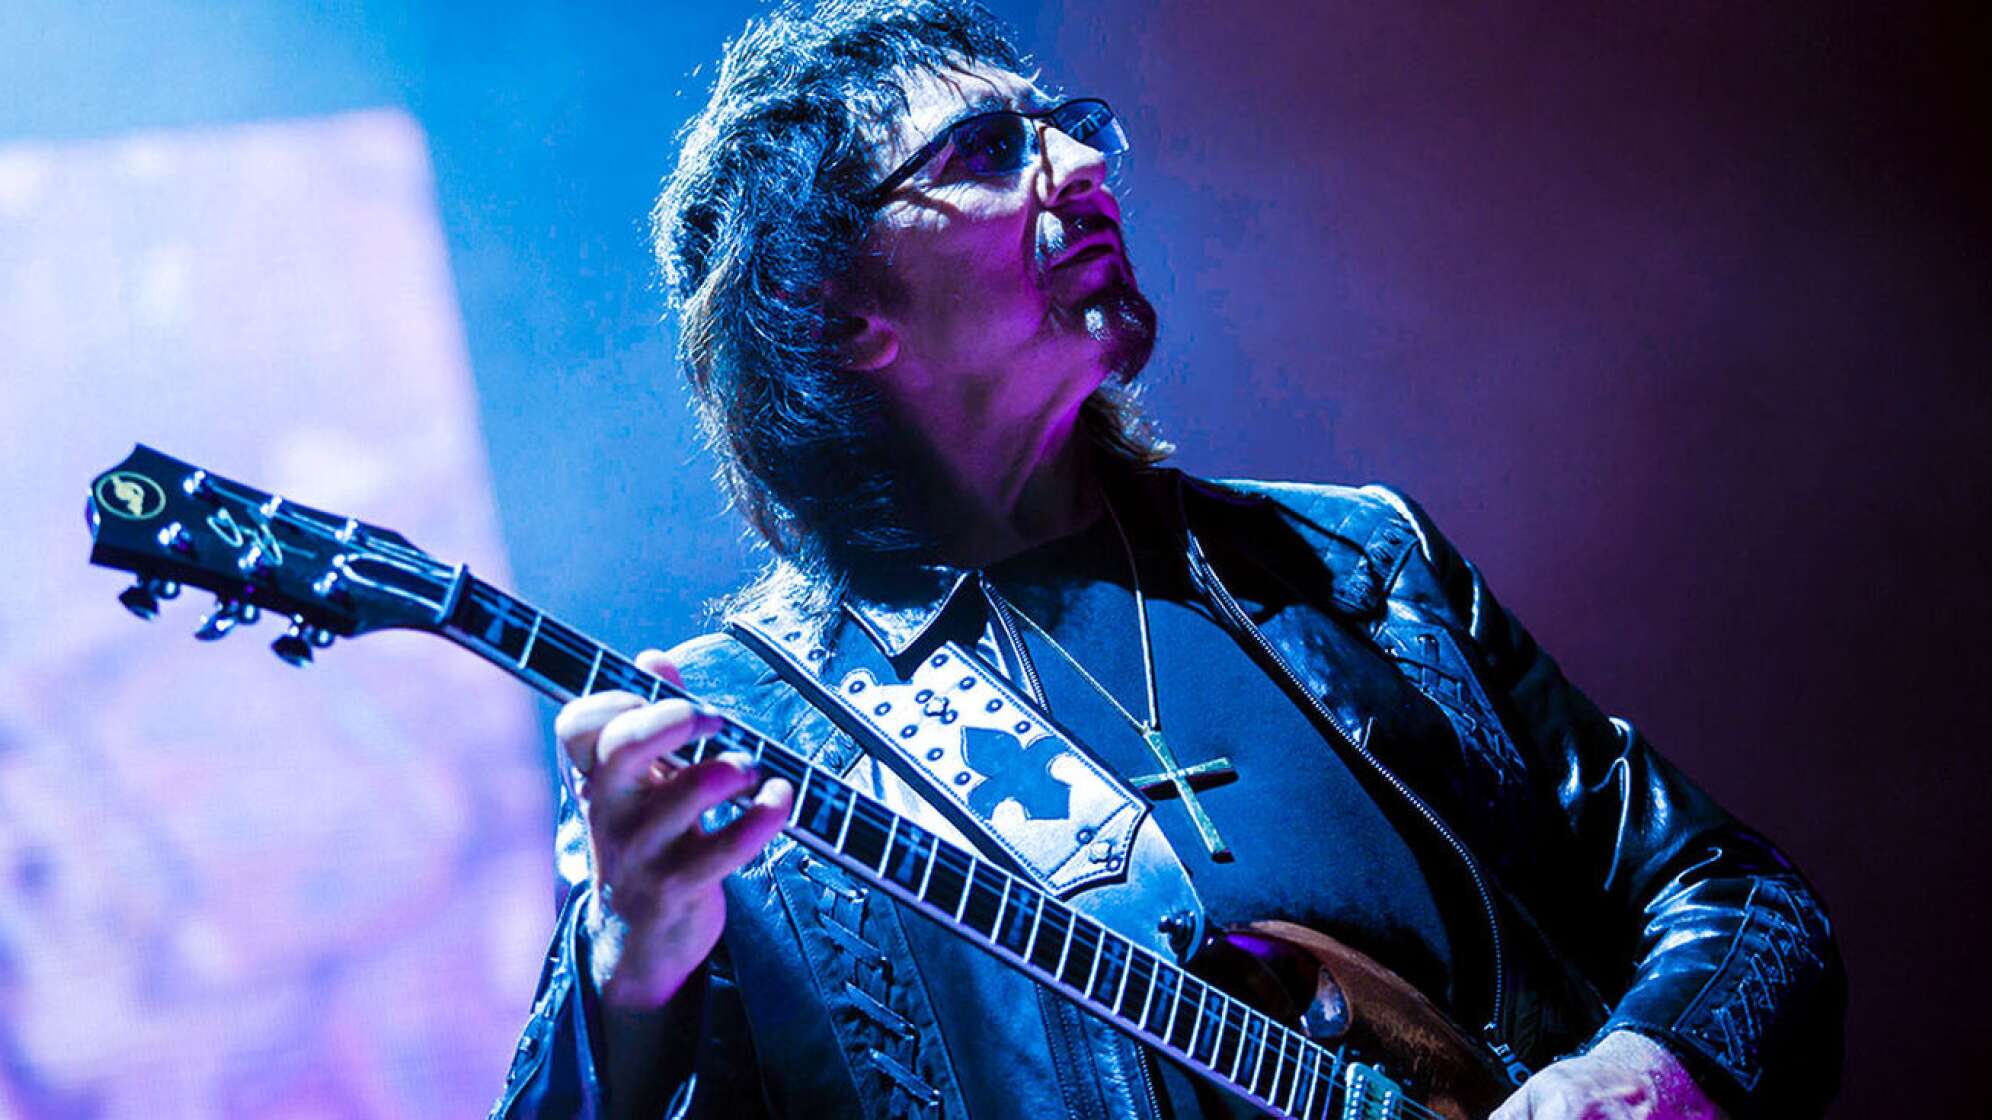 Tony Iommi spielt Gitarre